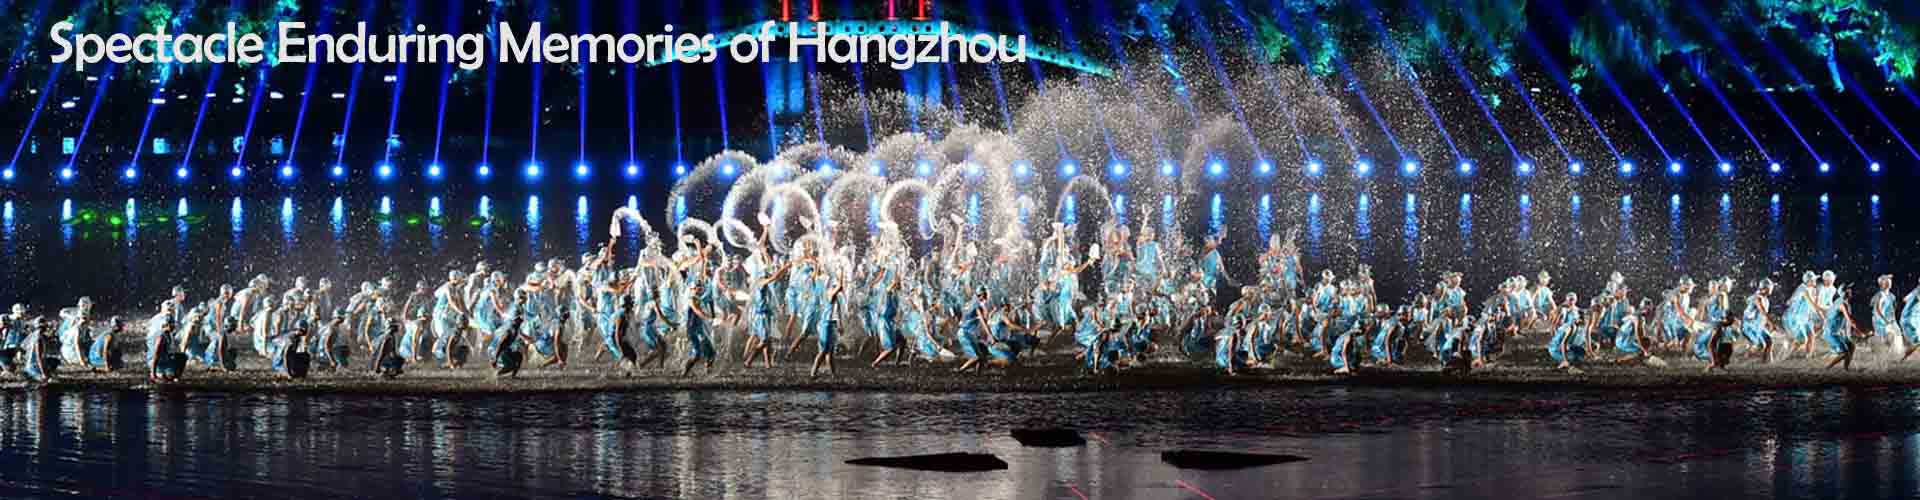 Spectacle Enduring Memories of Hangzhou